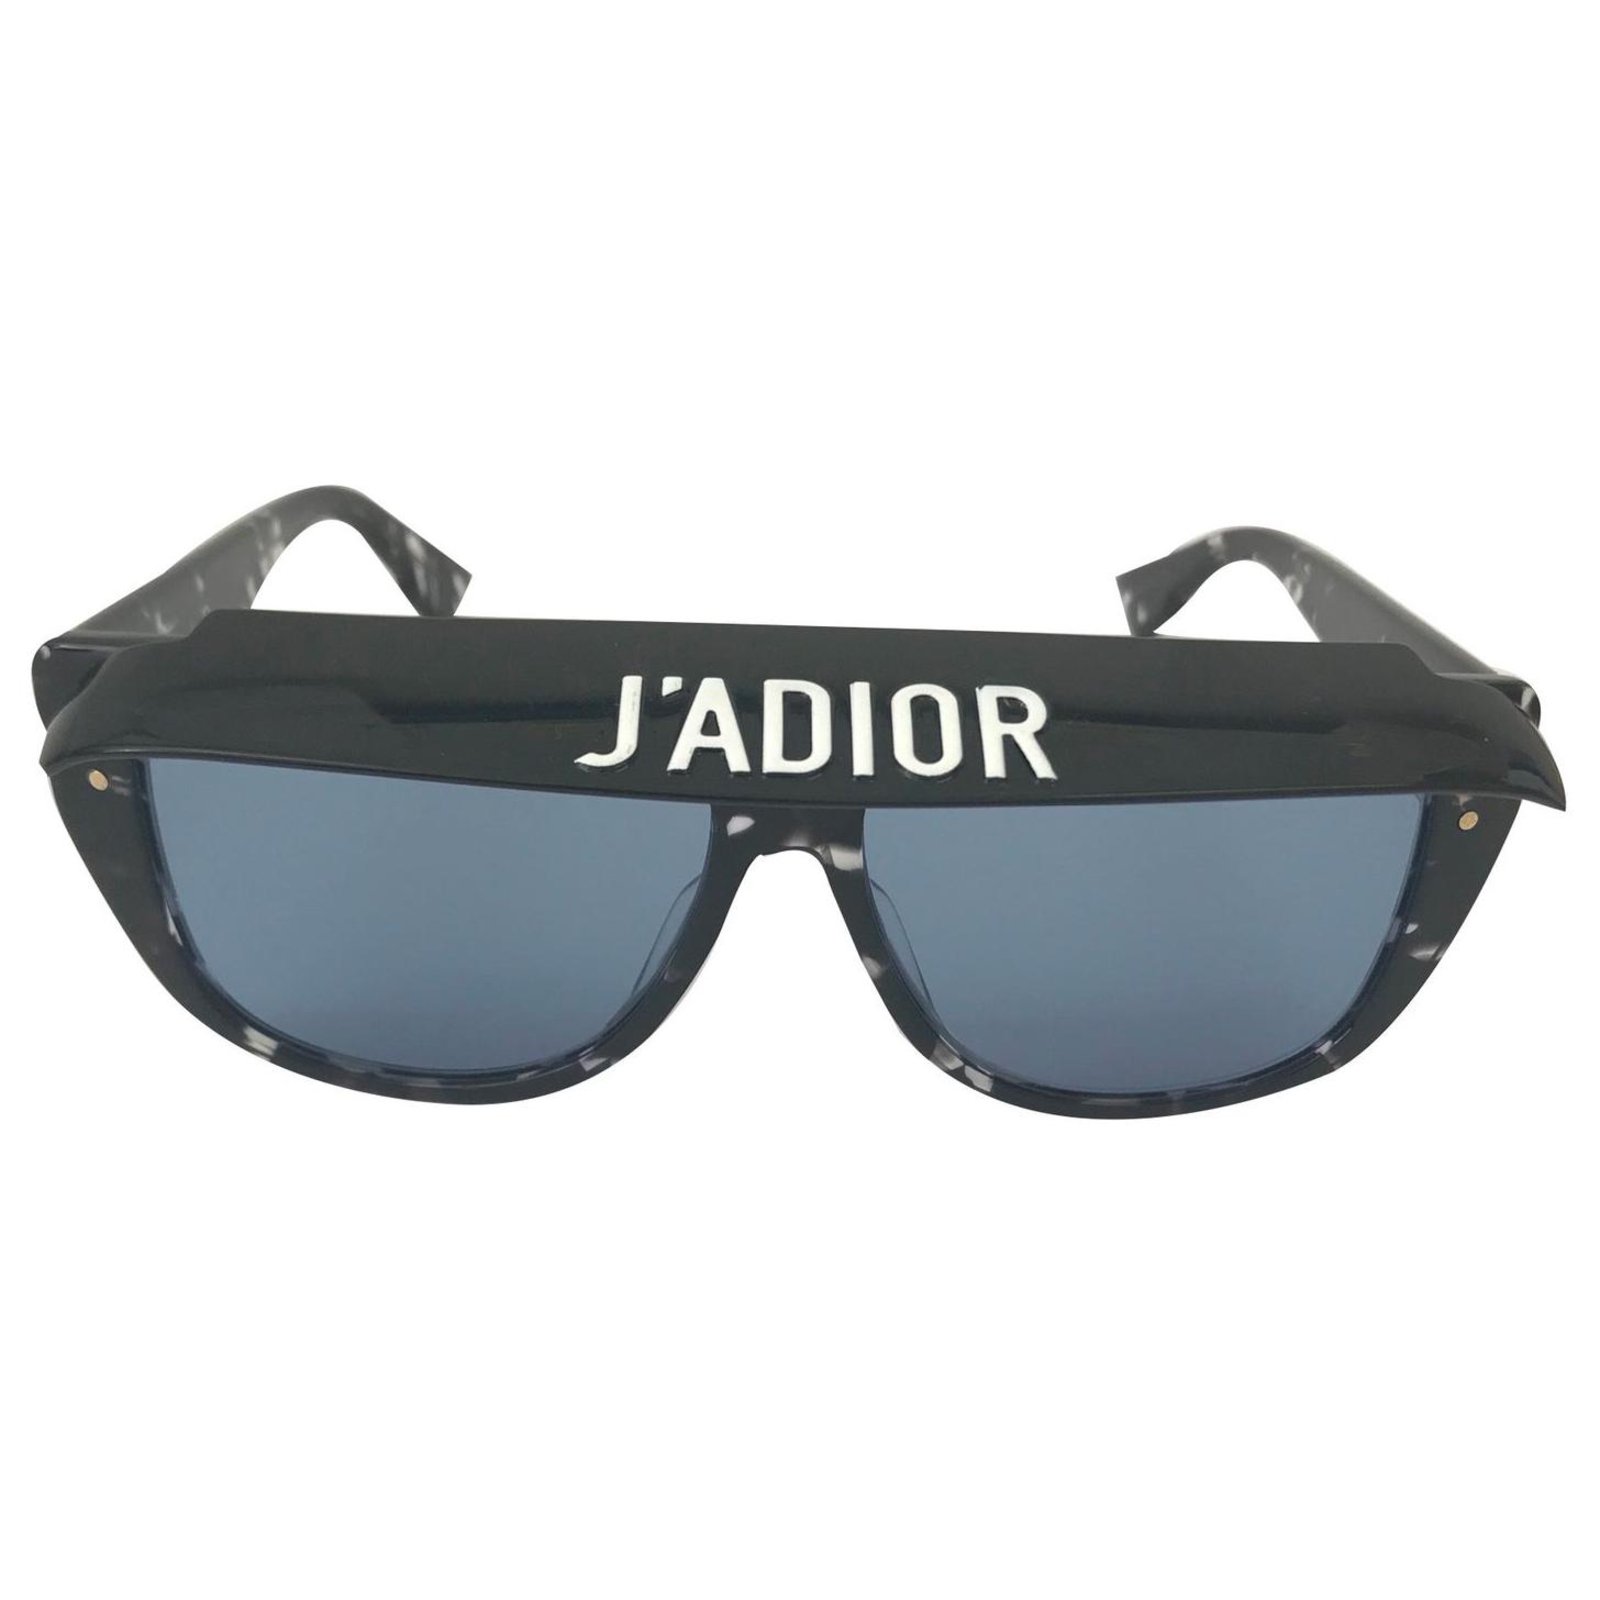 dior diorclub2 sunglasses